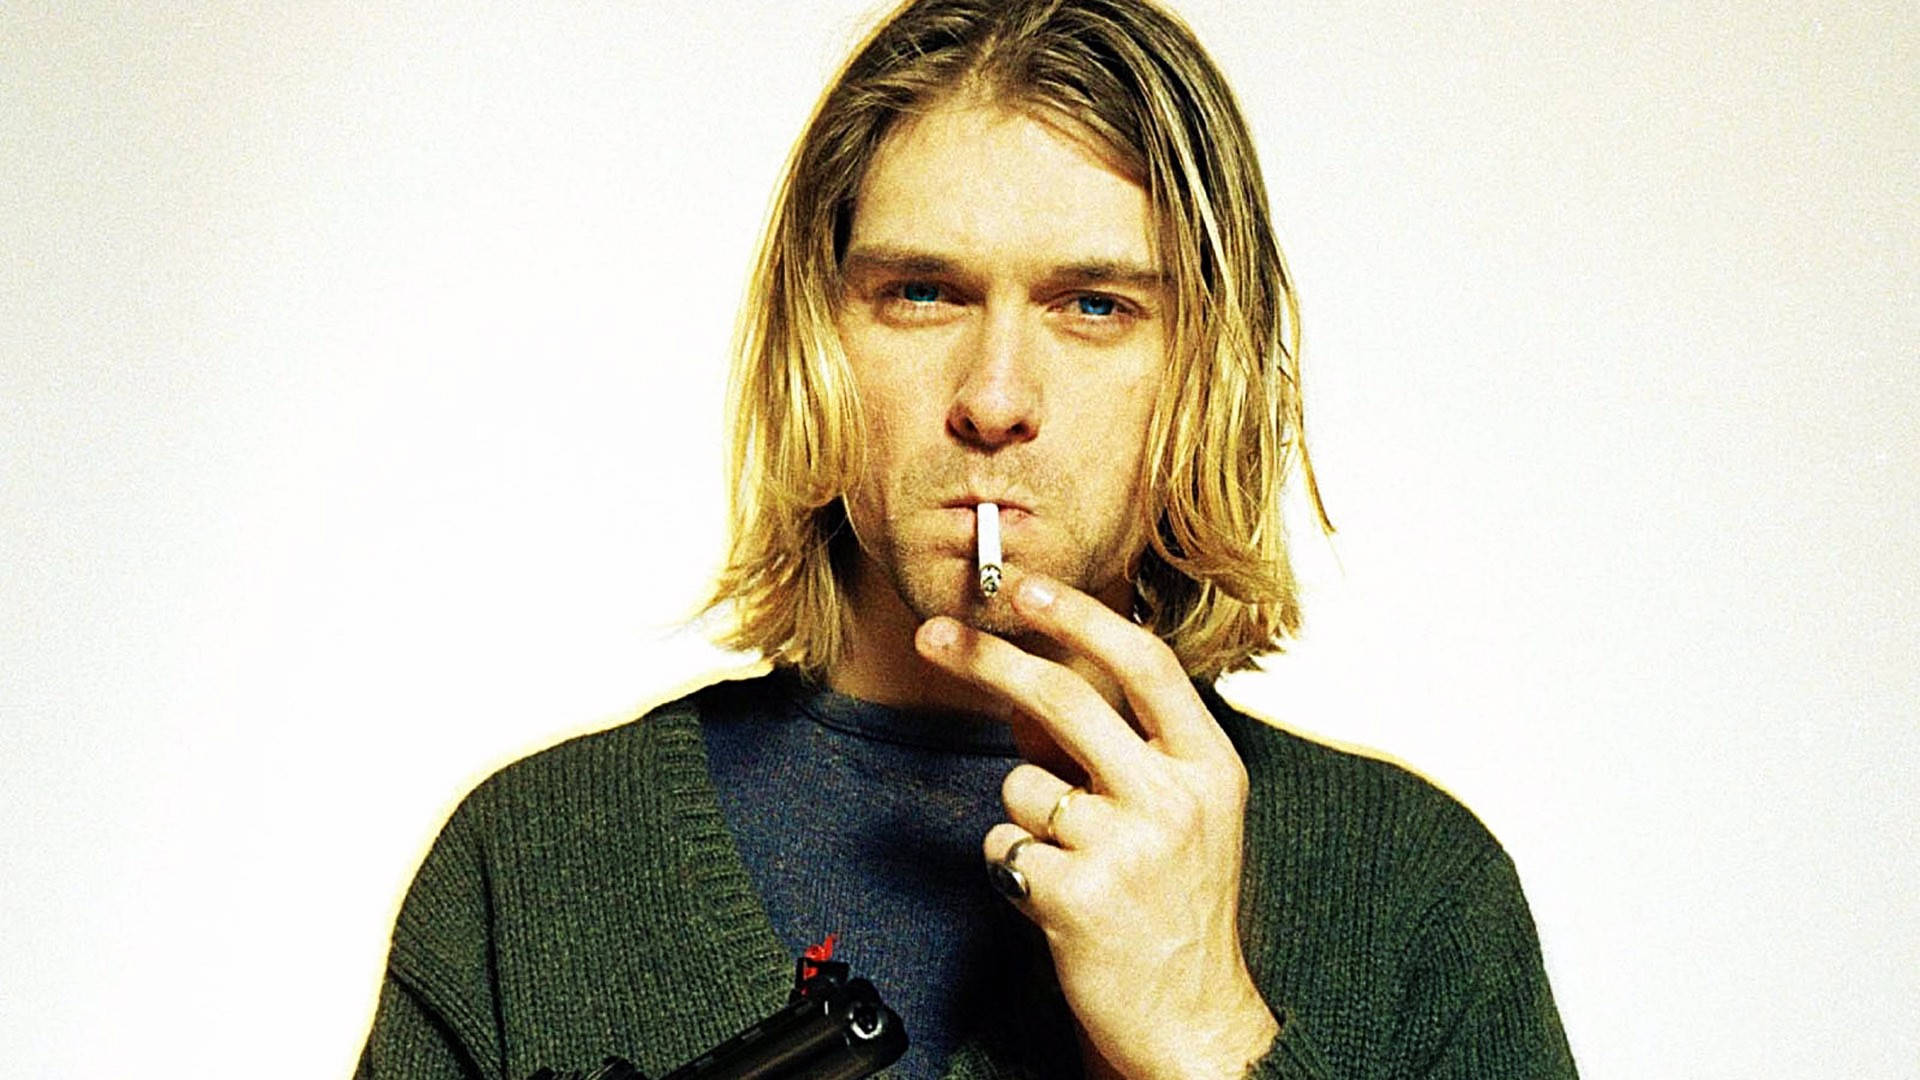 Kurt Cobain Smoking With Gun Background